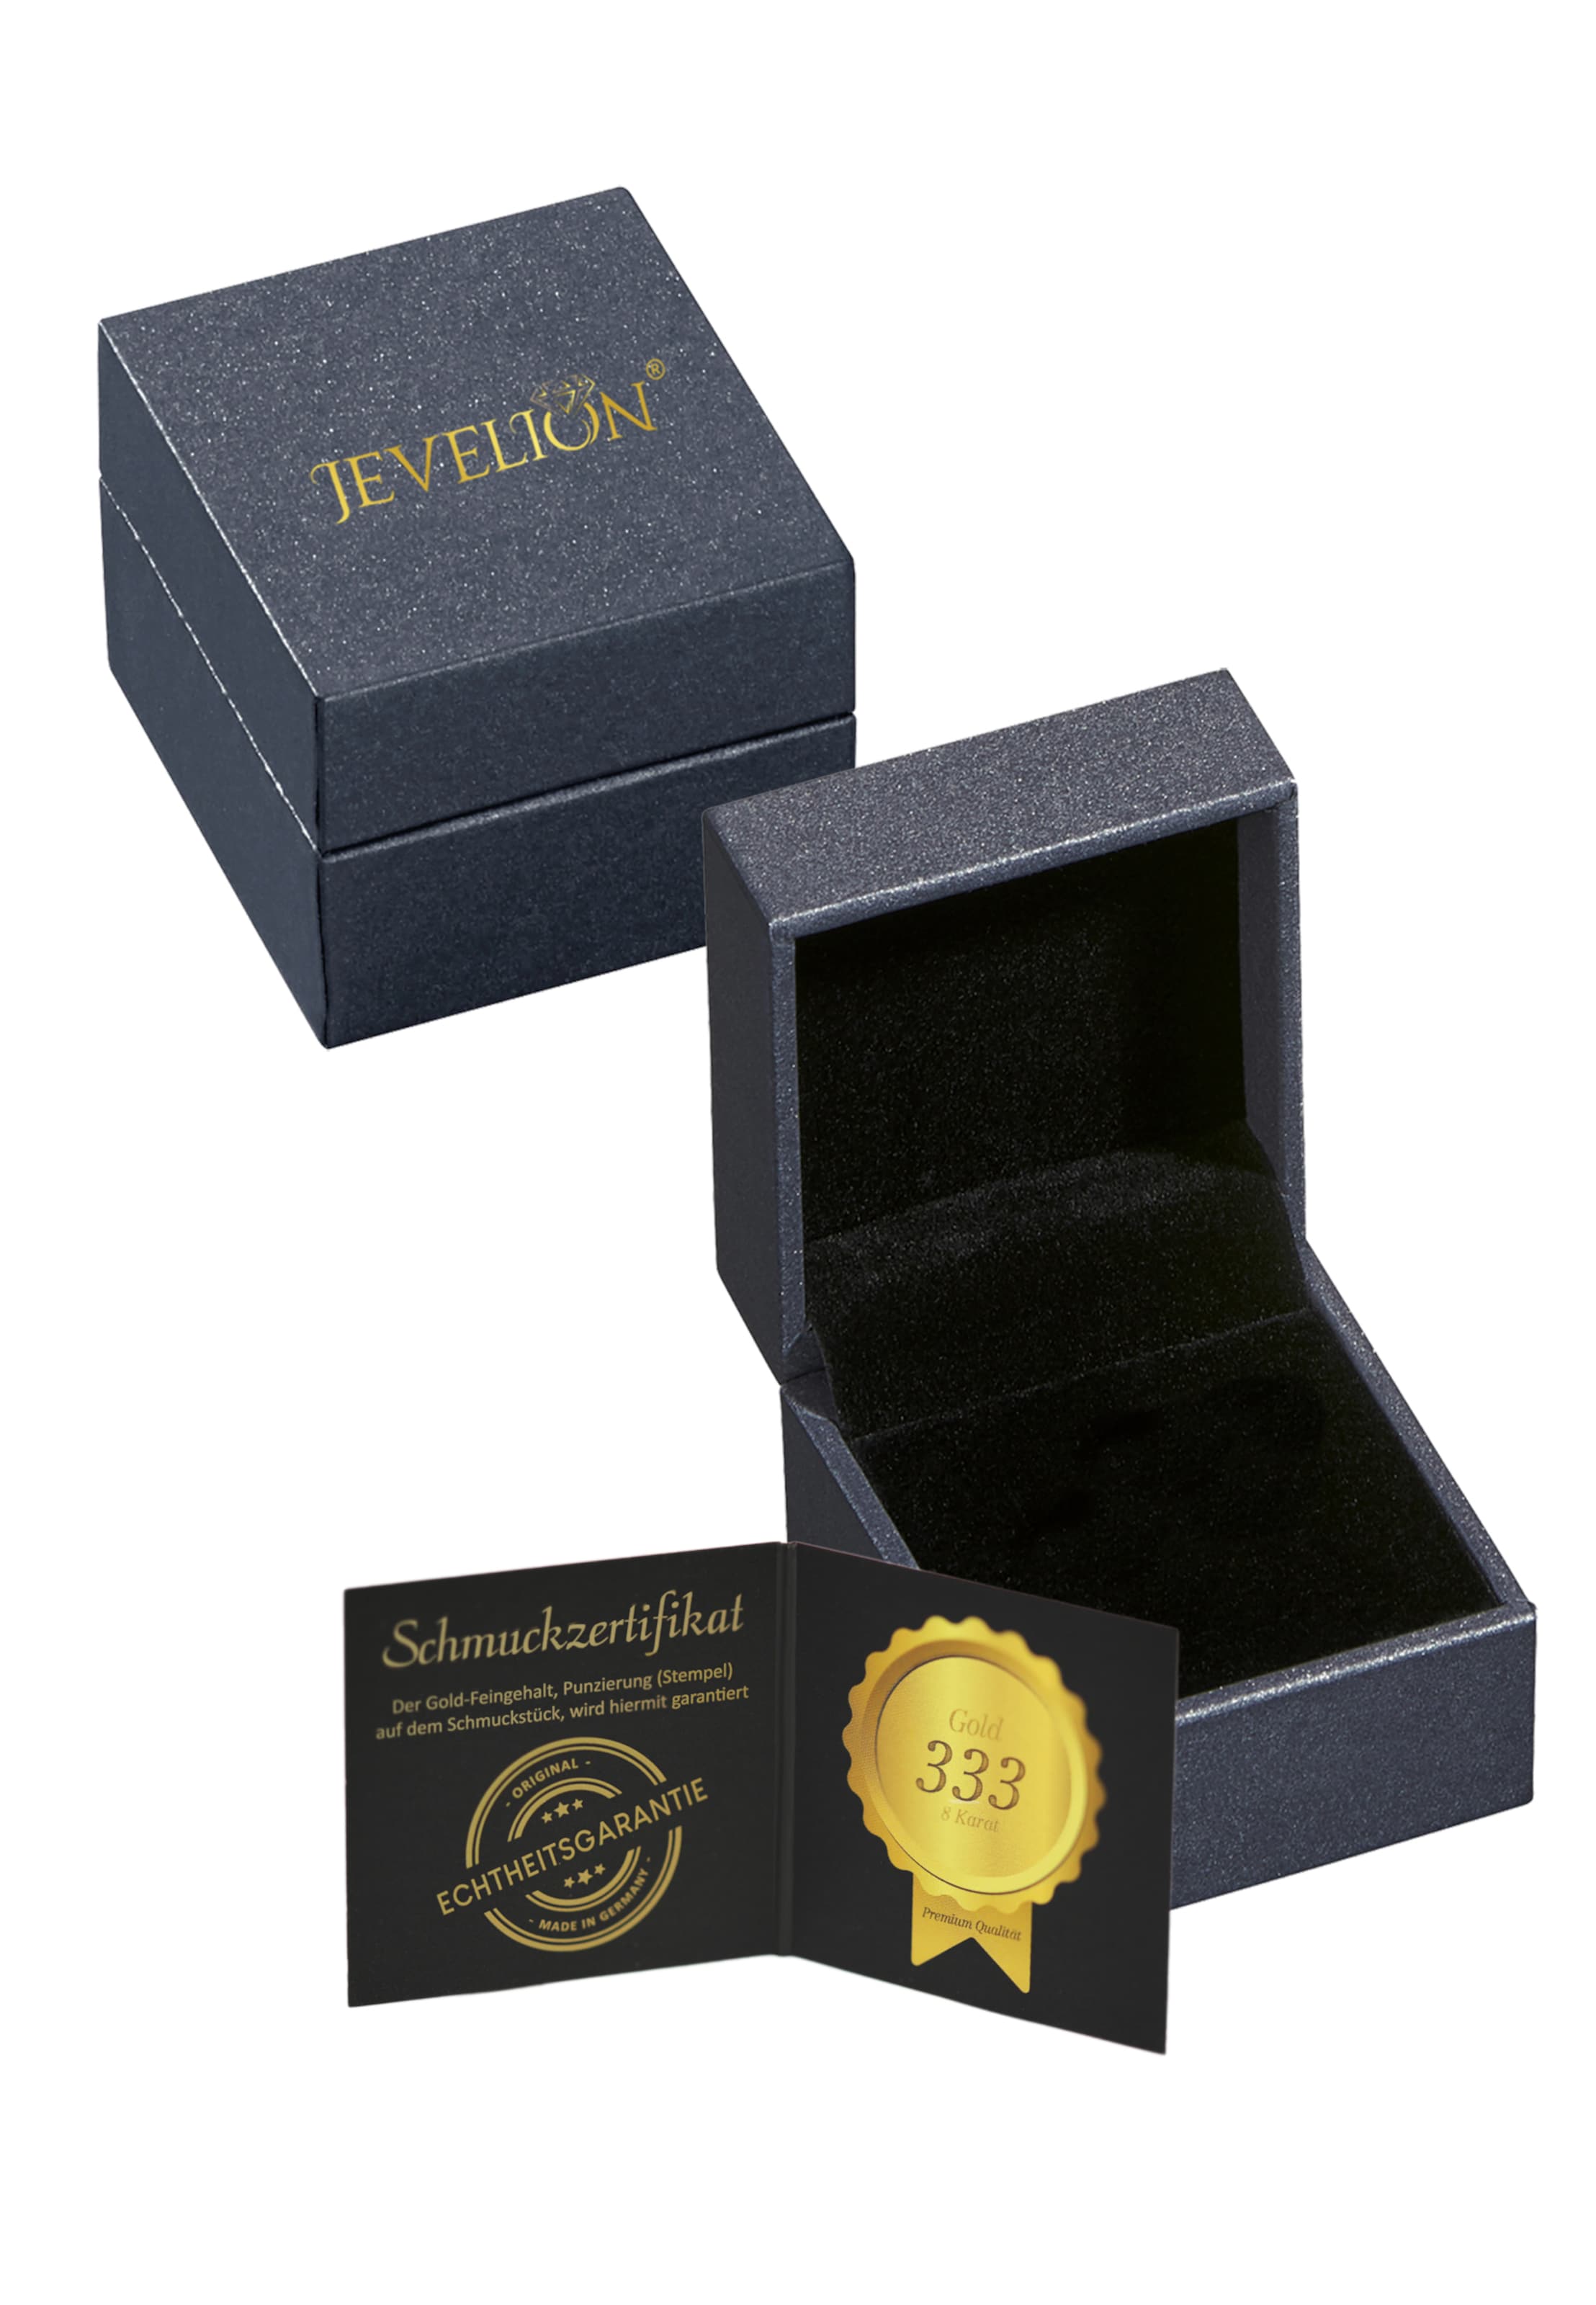 Männer Anzug - Accessoires JEVELION Krawattenhalter in Gold - RM93604